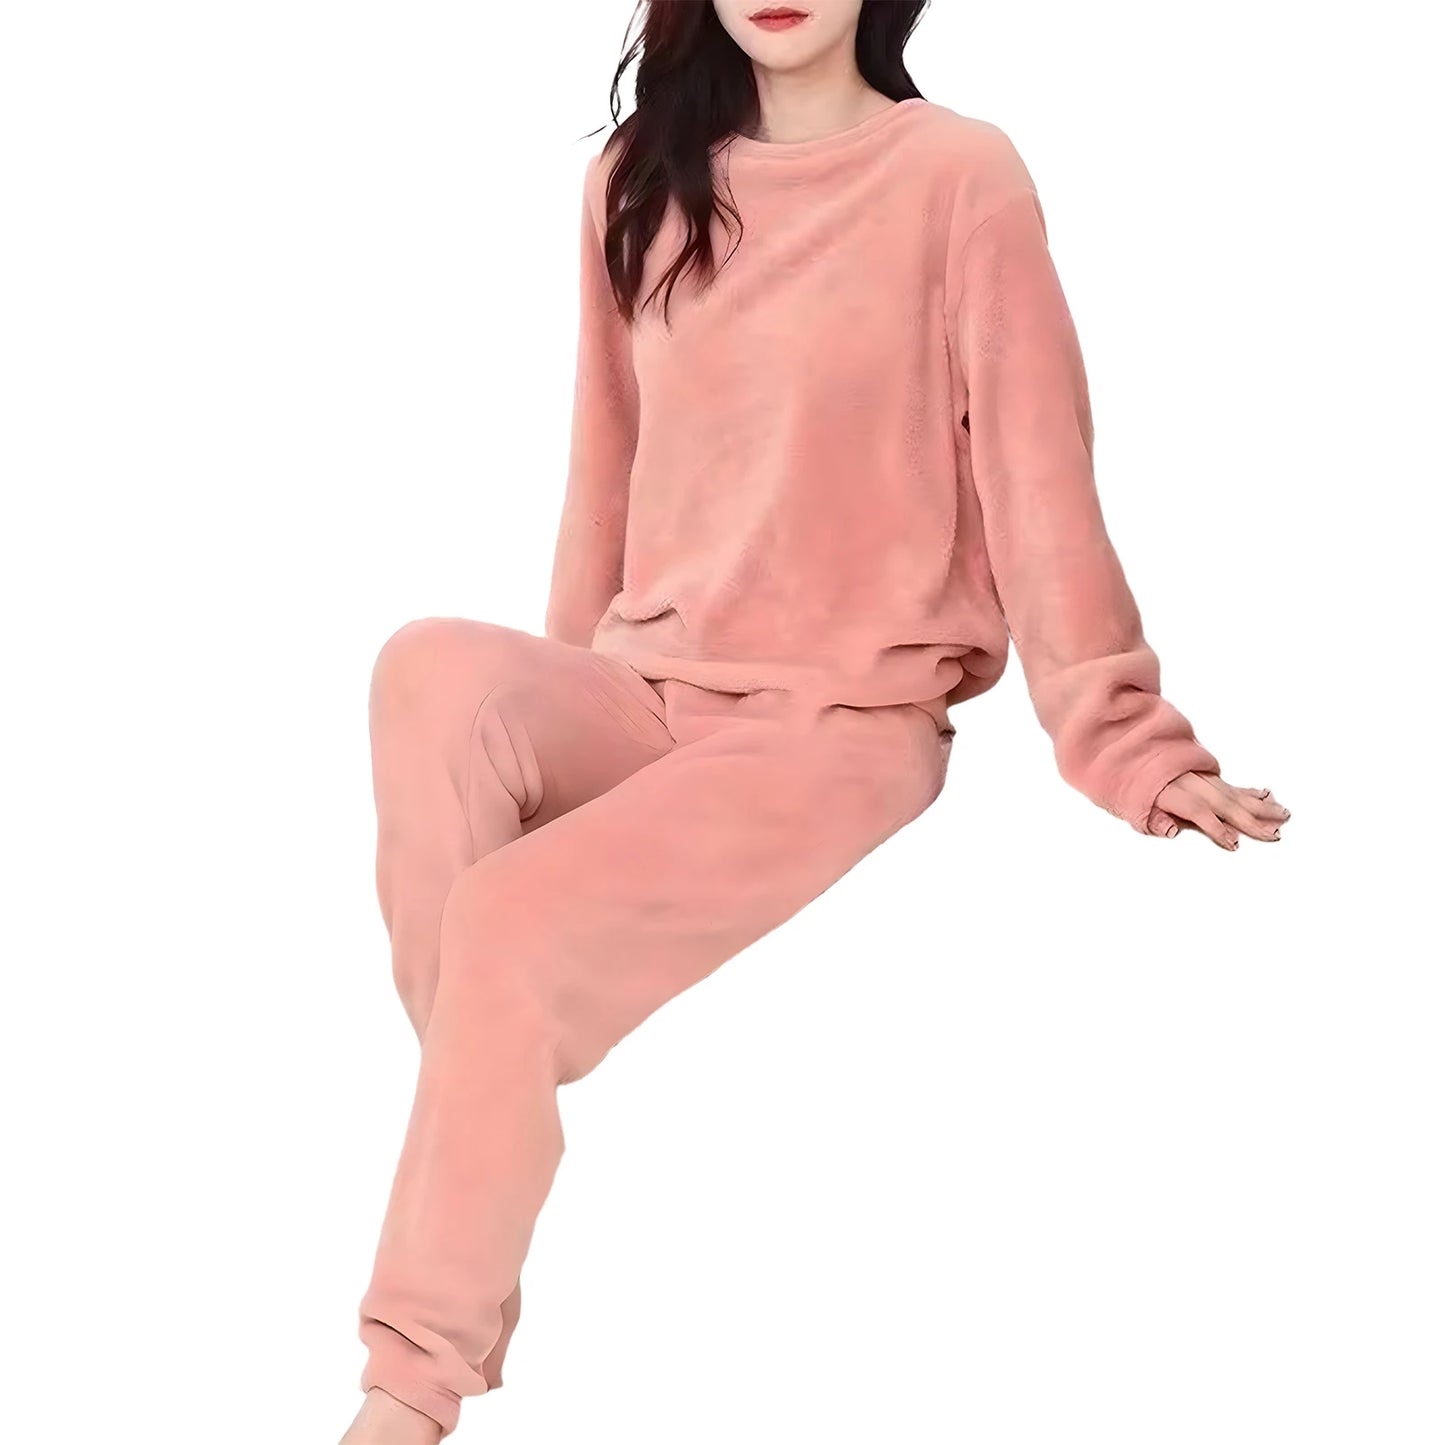 Pyjamas Sets - Warm Thick/Velvety, Flannel, Long Sleeve, Cartoon, Loungewear/Sleepwear - Light Pink